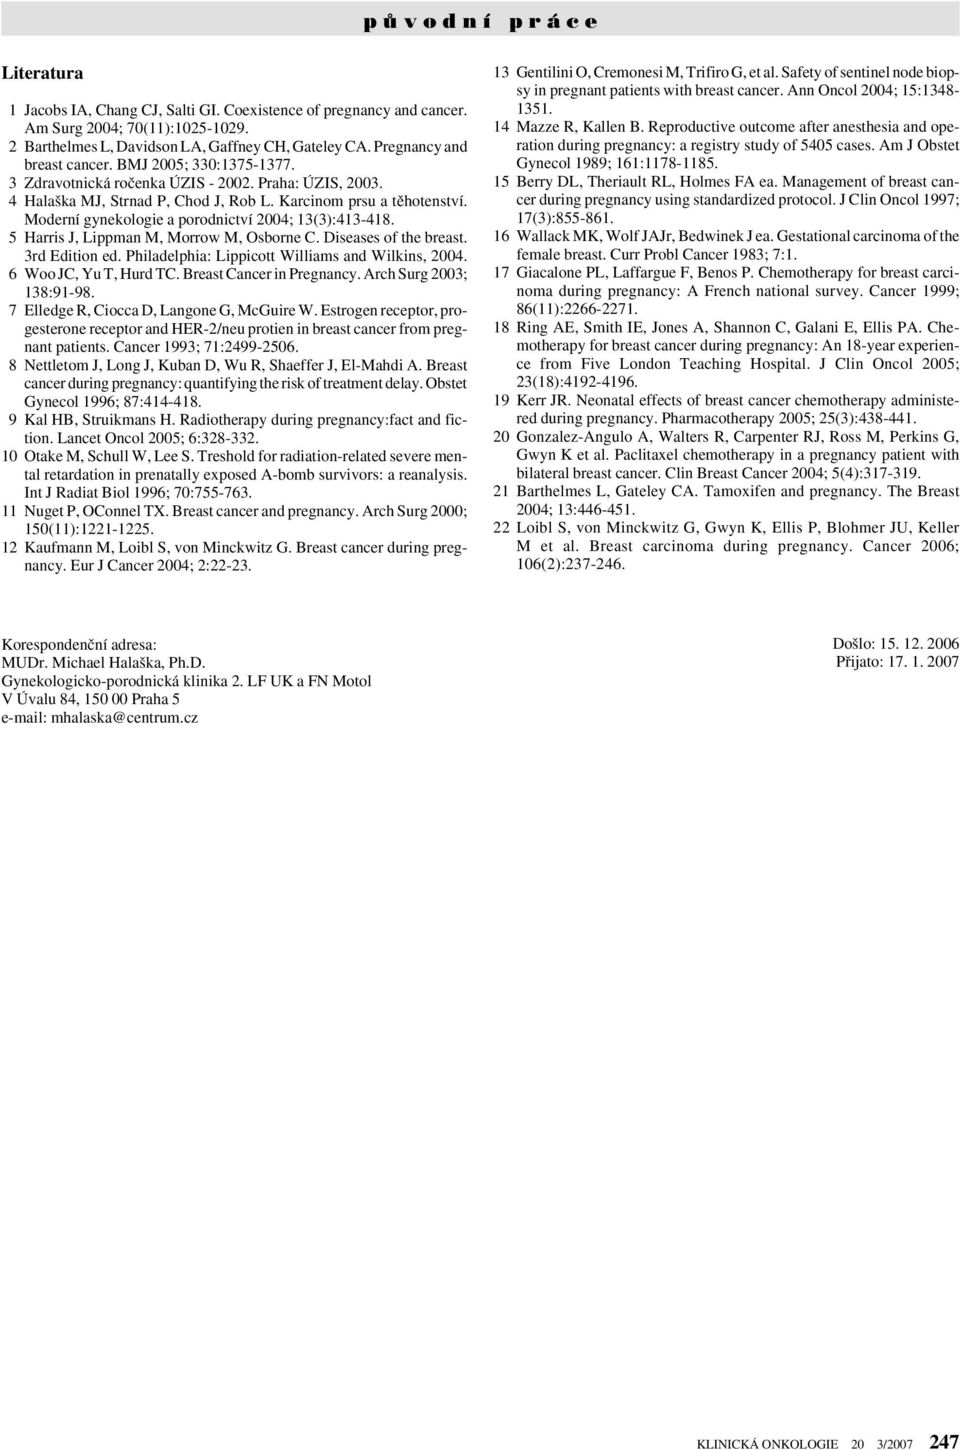 Moderní gynekologie a porodnictví 2004; 13(3):413-418. 5 Harris J, Lippman M, Morrow M, Osborne C. Diseases of the breast. 3rd Edition ed. Philadelphia: Lippicott Williams and Wilkins, 2004.